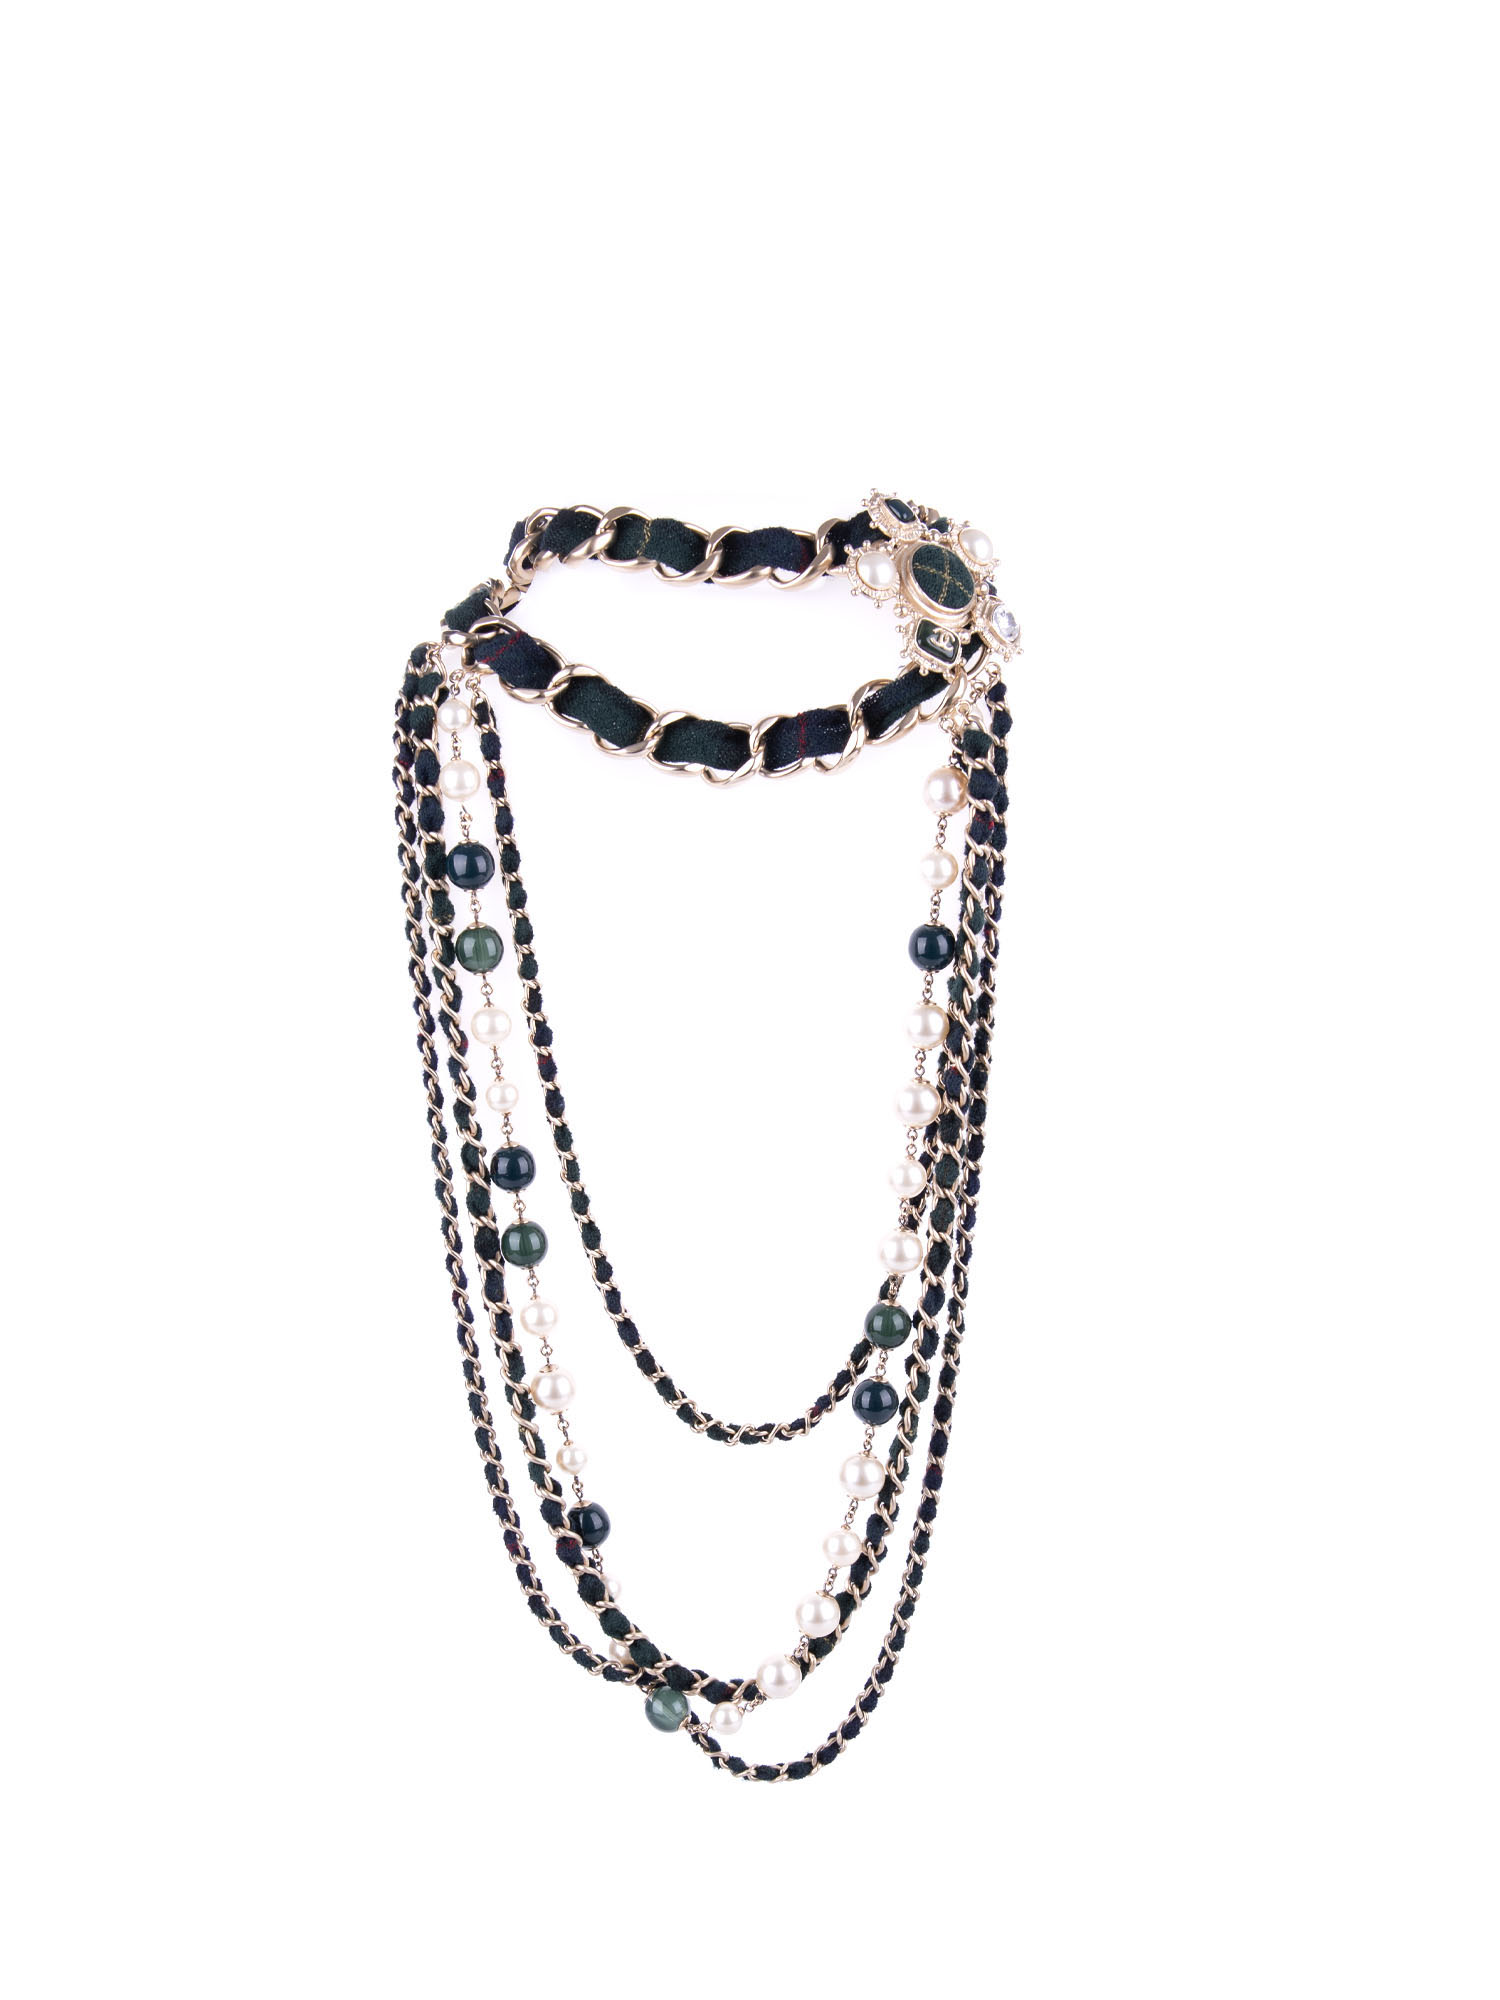 Chanel Necklace from Paris Edinburgh Metiers d Art Collection